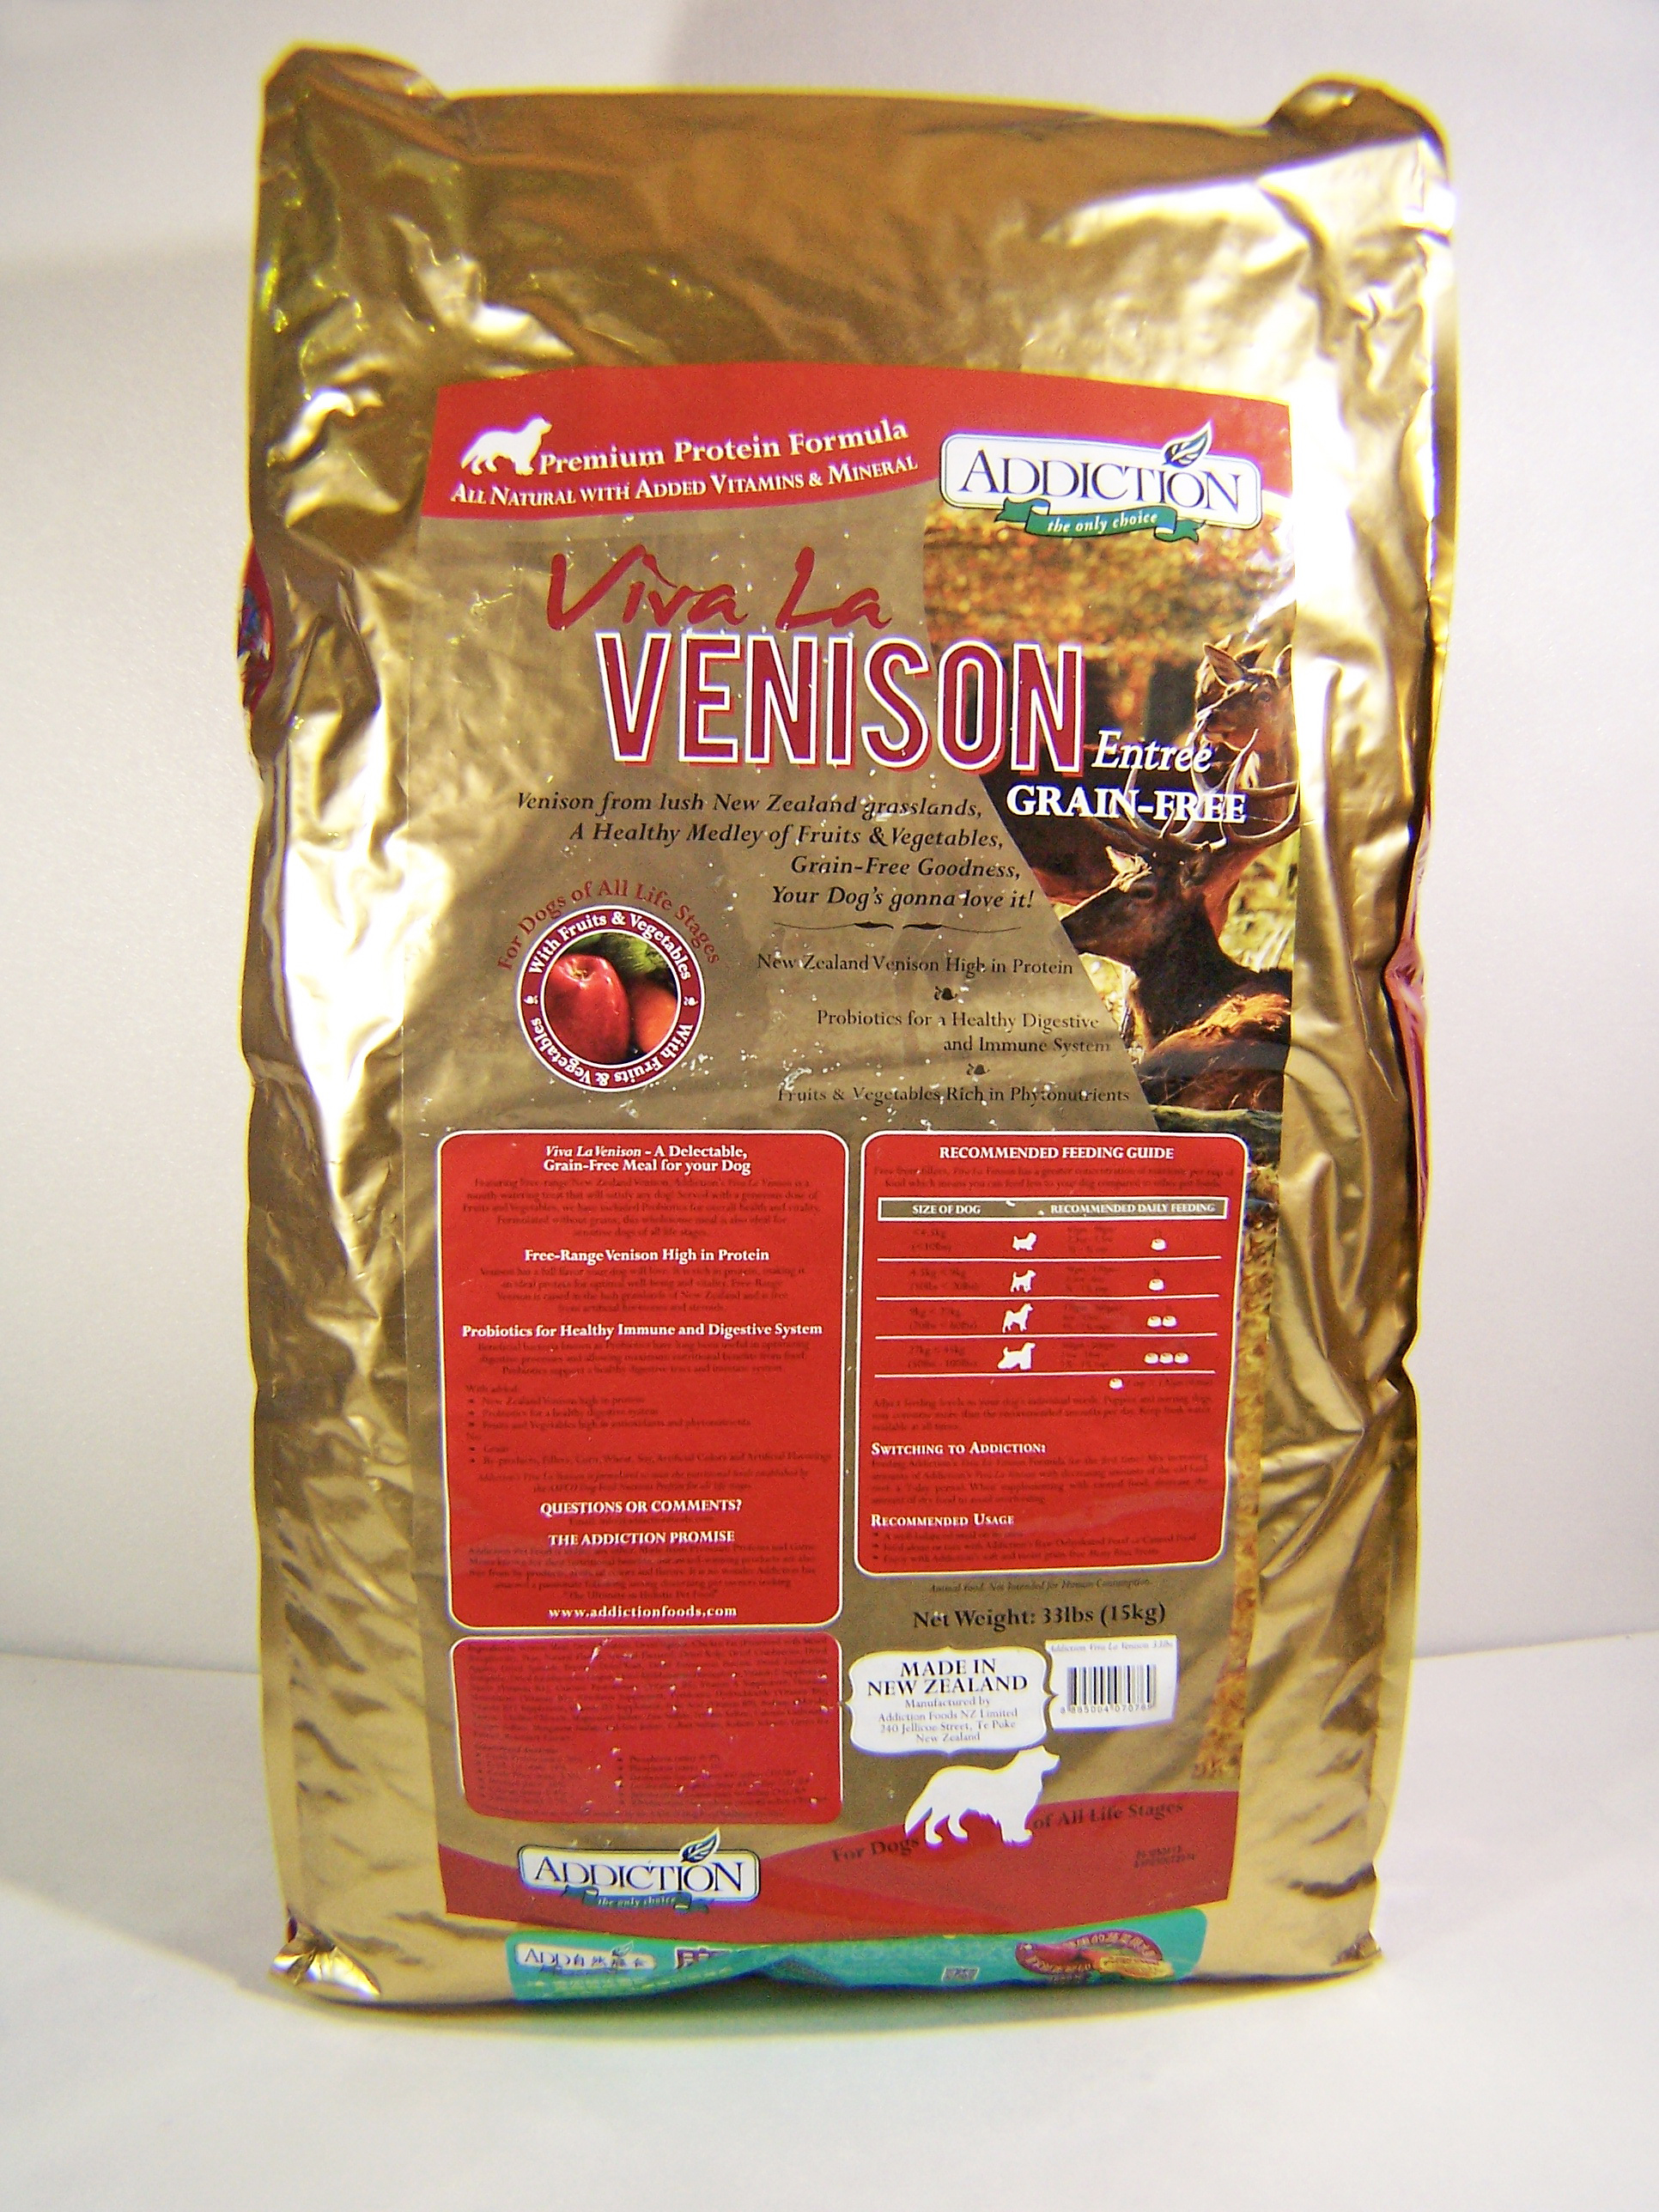 ADD自然癮食無穀鹿肉寵食15kg
Viva La Venison Dog